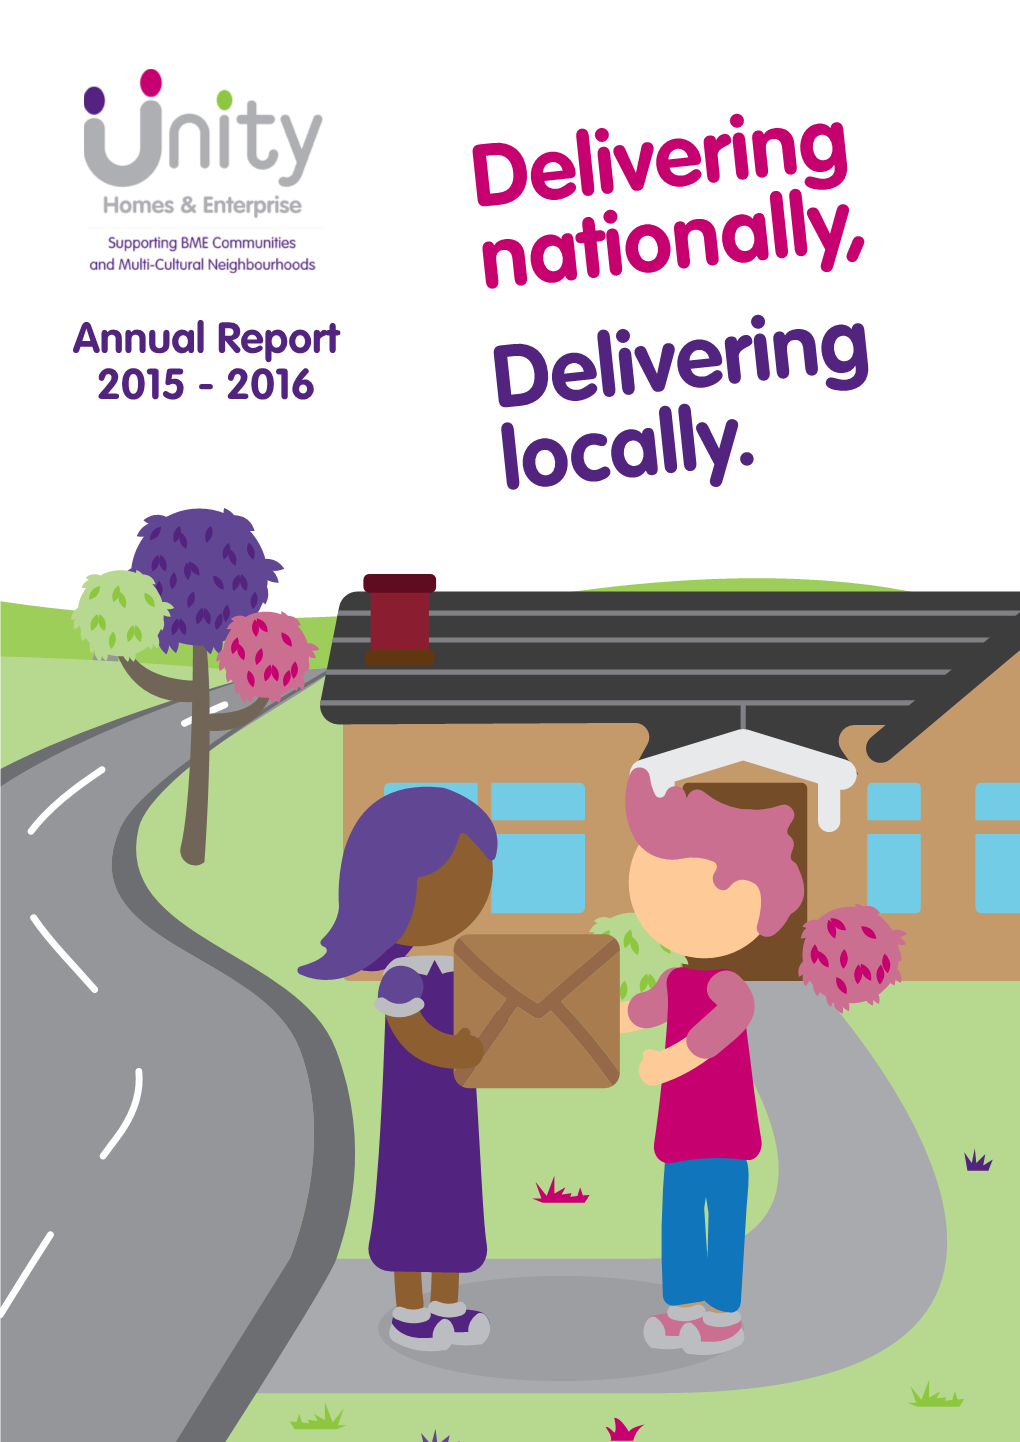 Unity's 2015/16 Annual Report